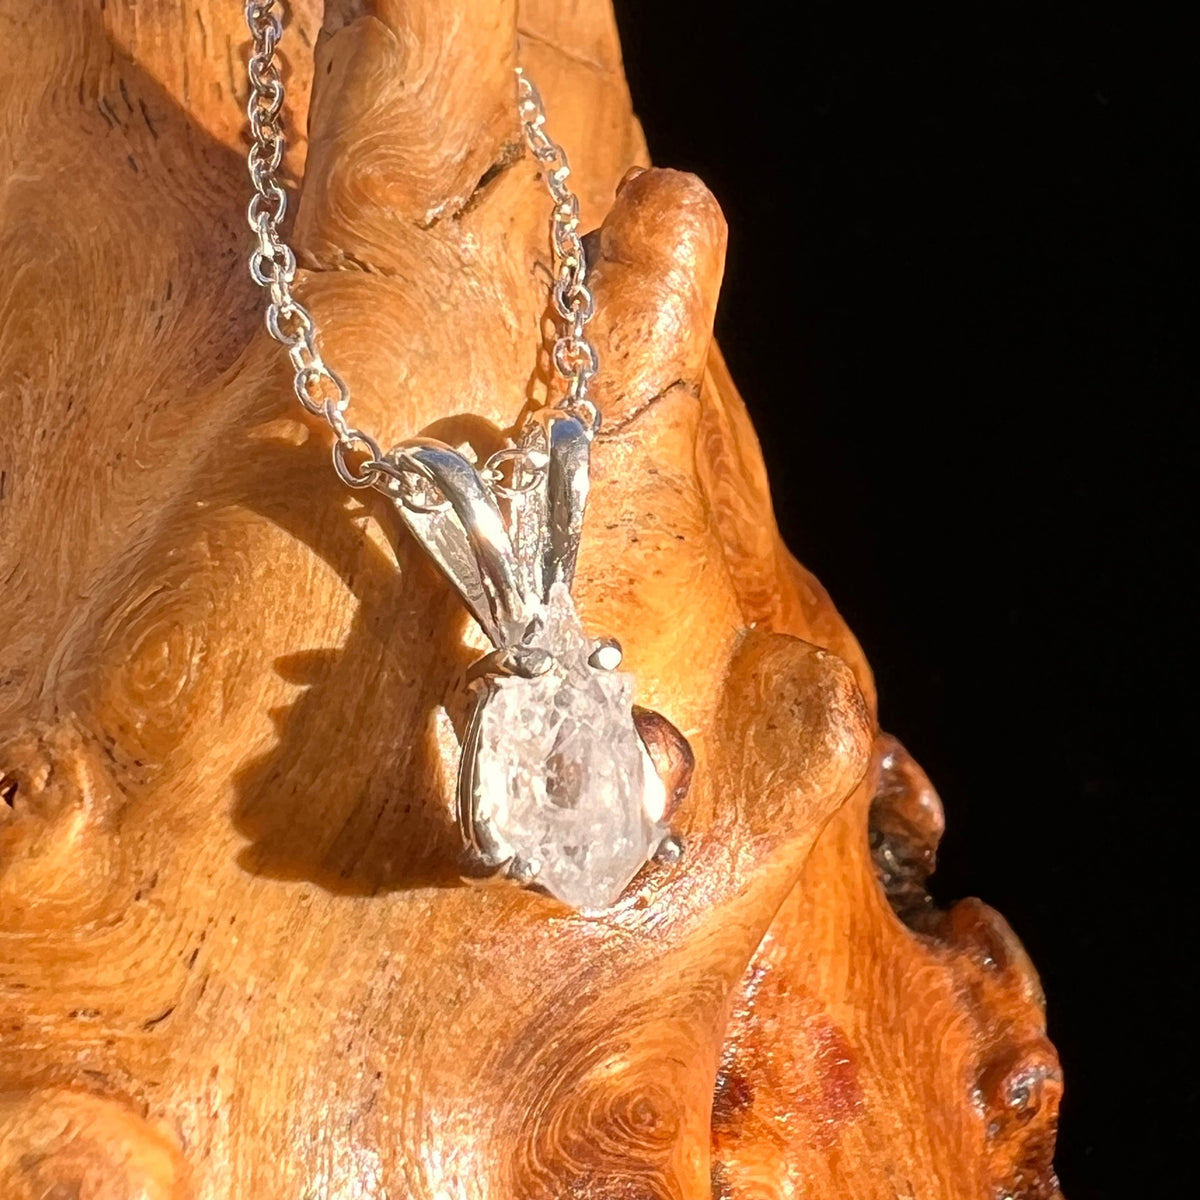 Anandalite Necklace Sterling Silver #6018-Moldavite Life